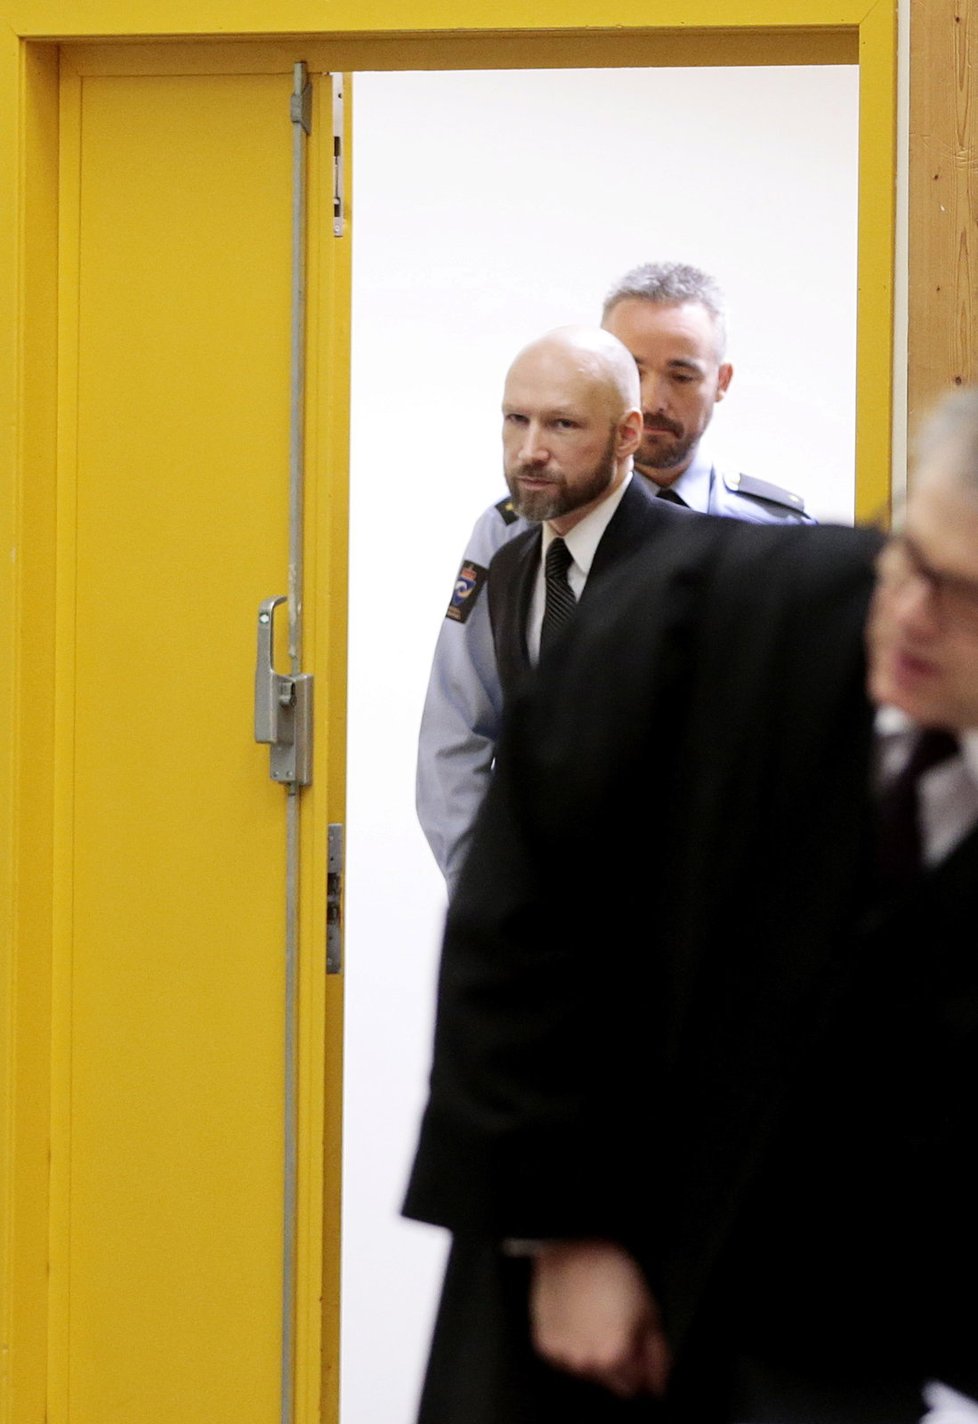 Breivik u příchodu k soudu opět hajloval.